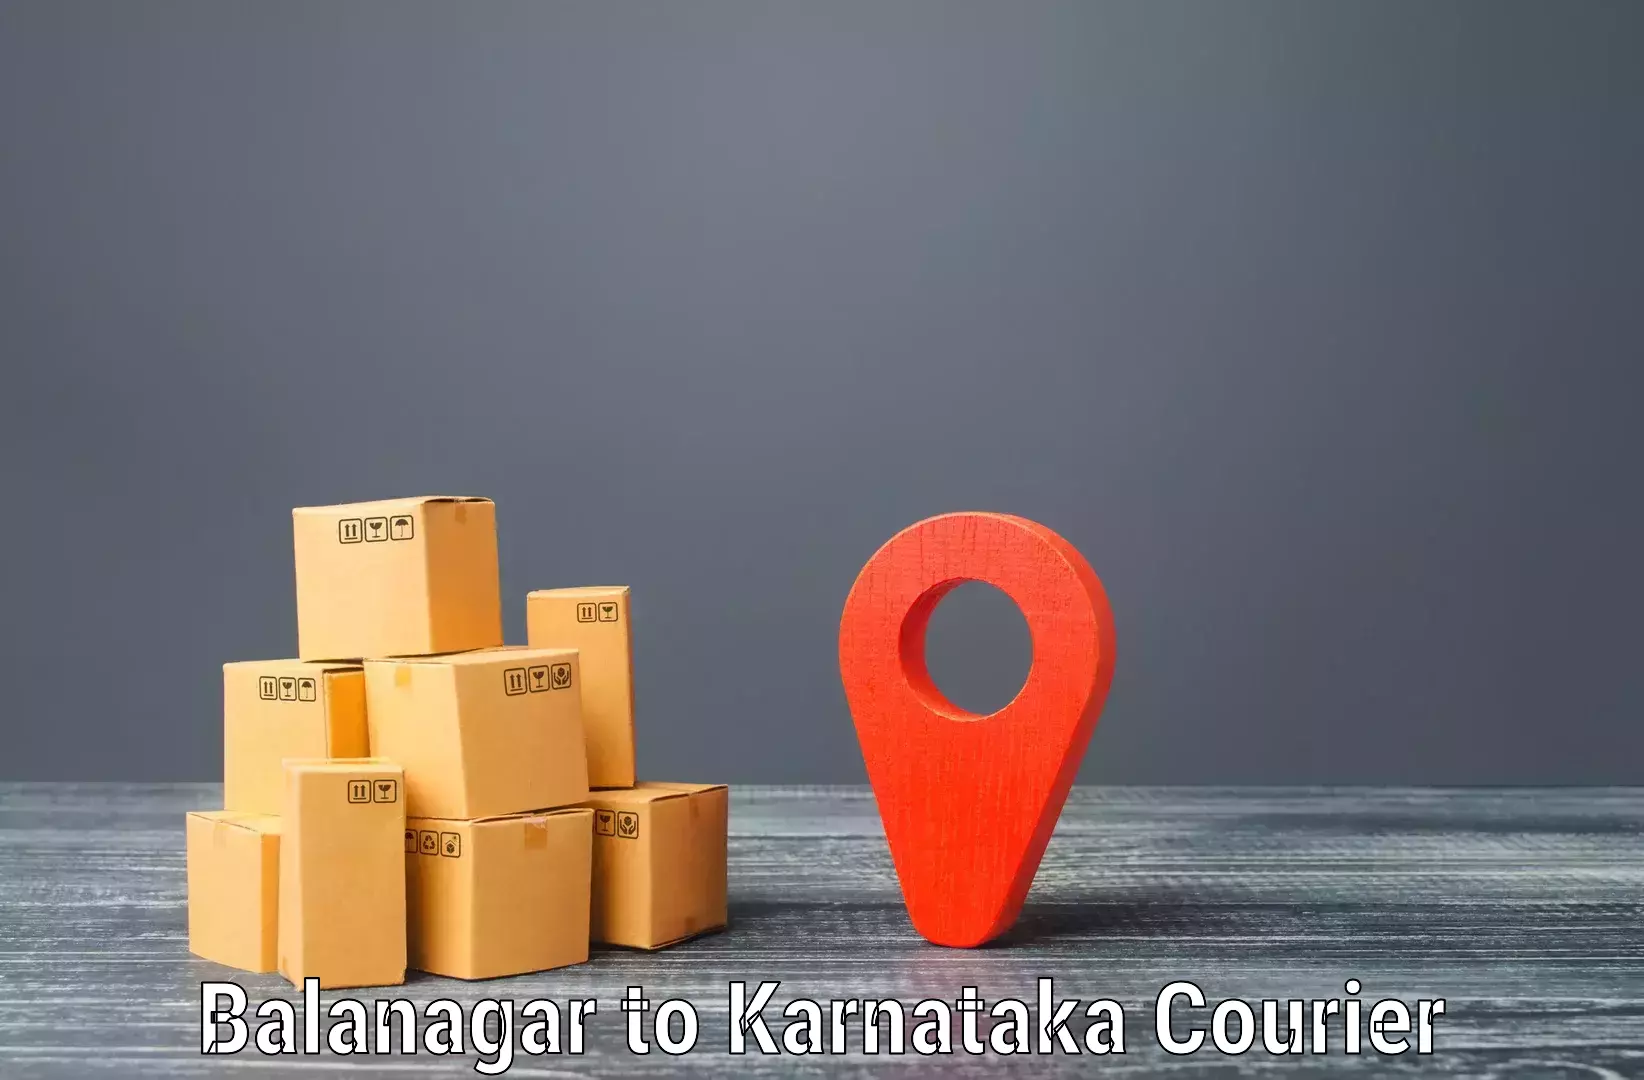 Same-day delivery options Balanagar to Mysore University